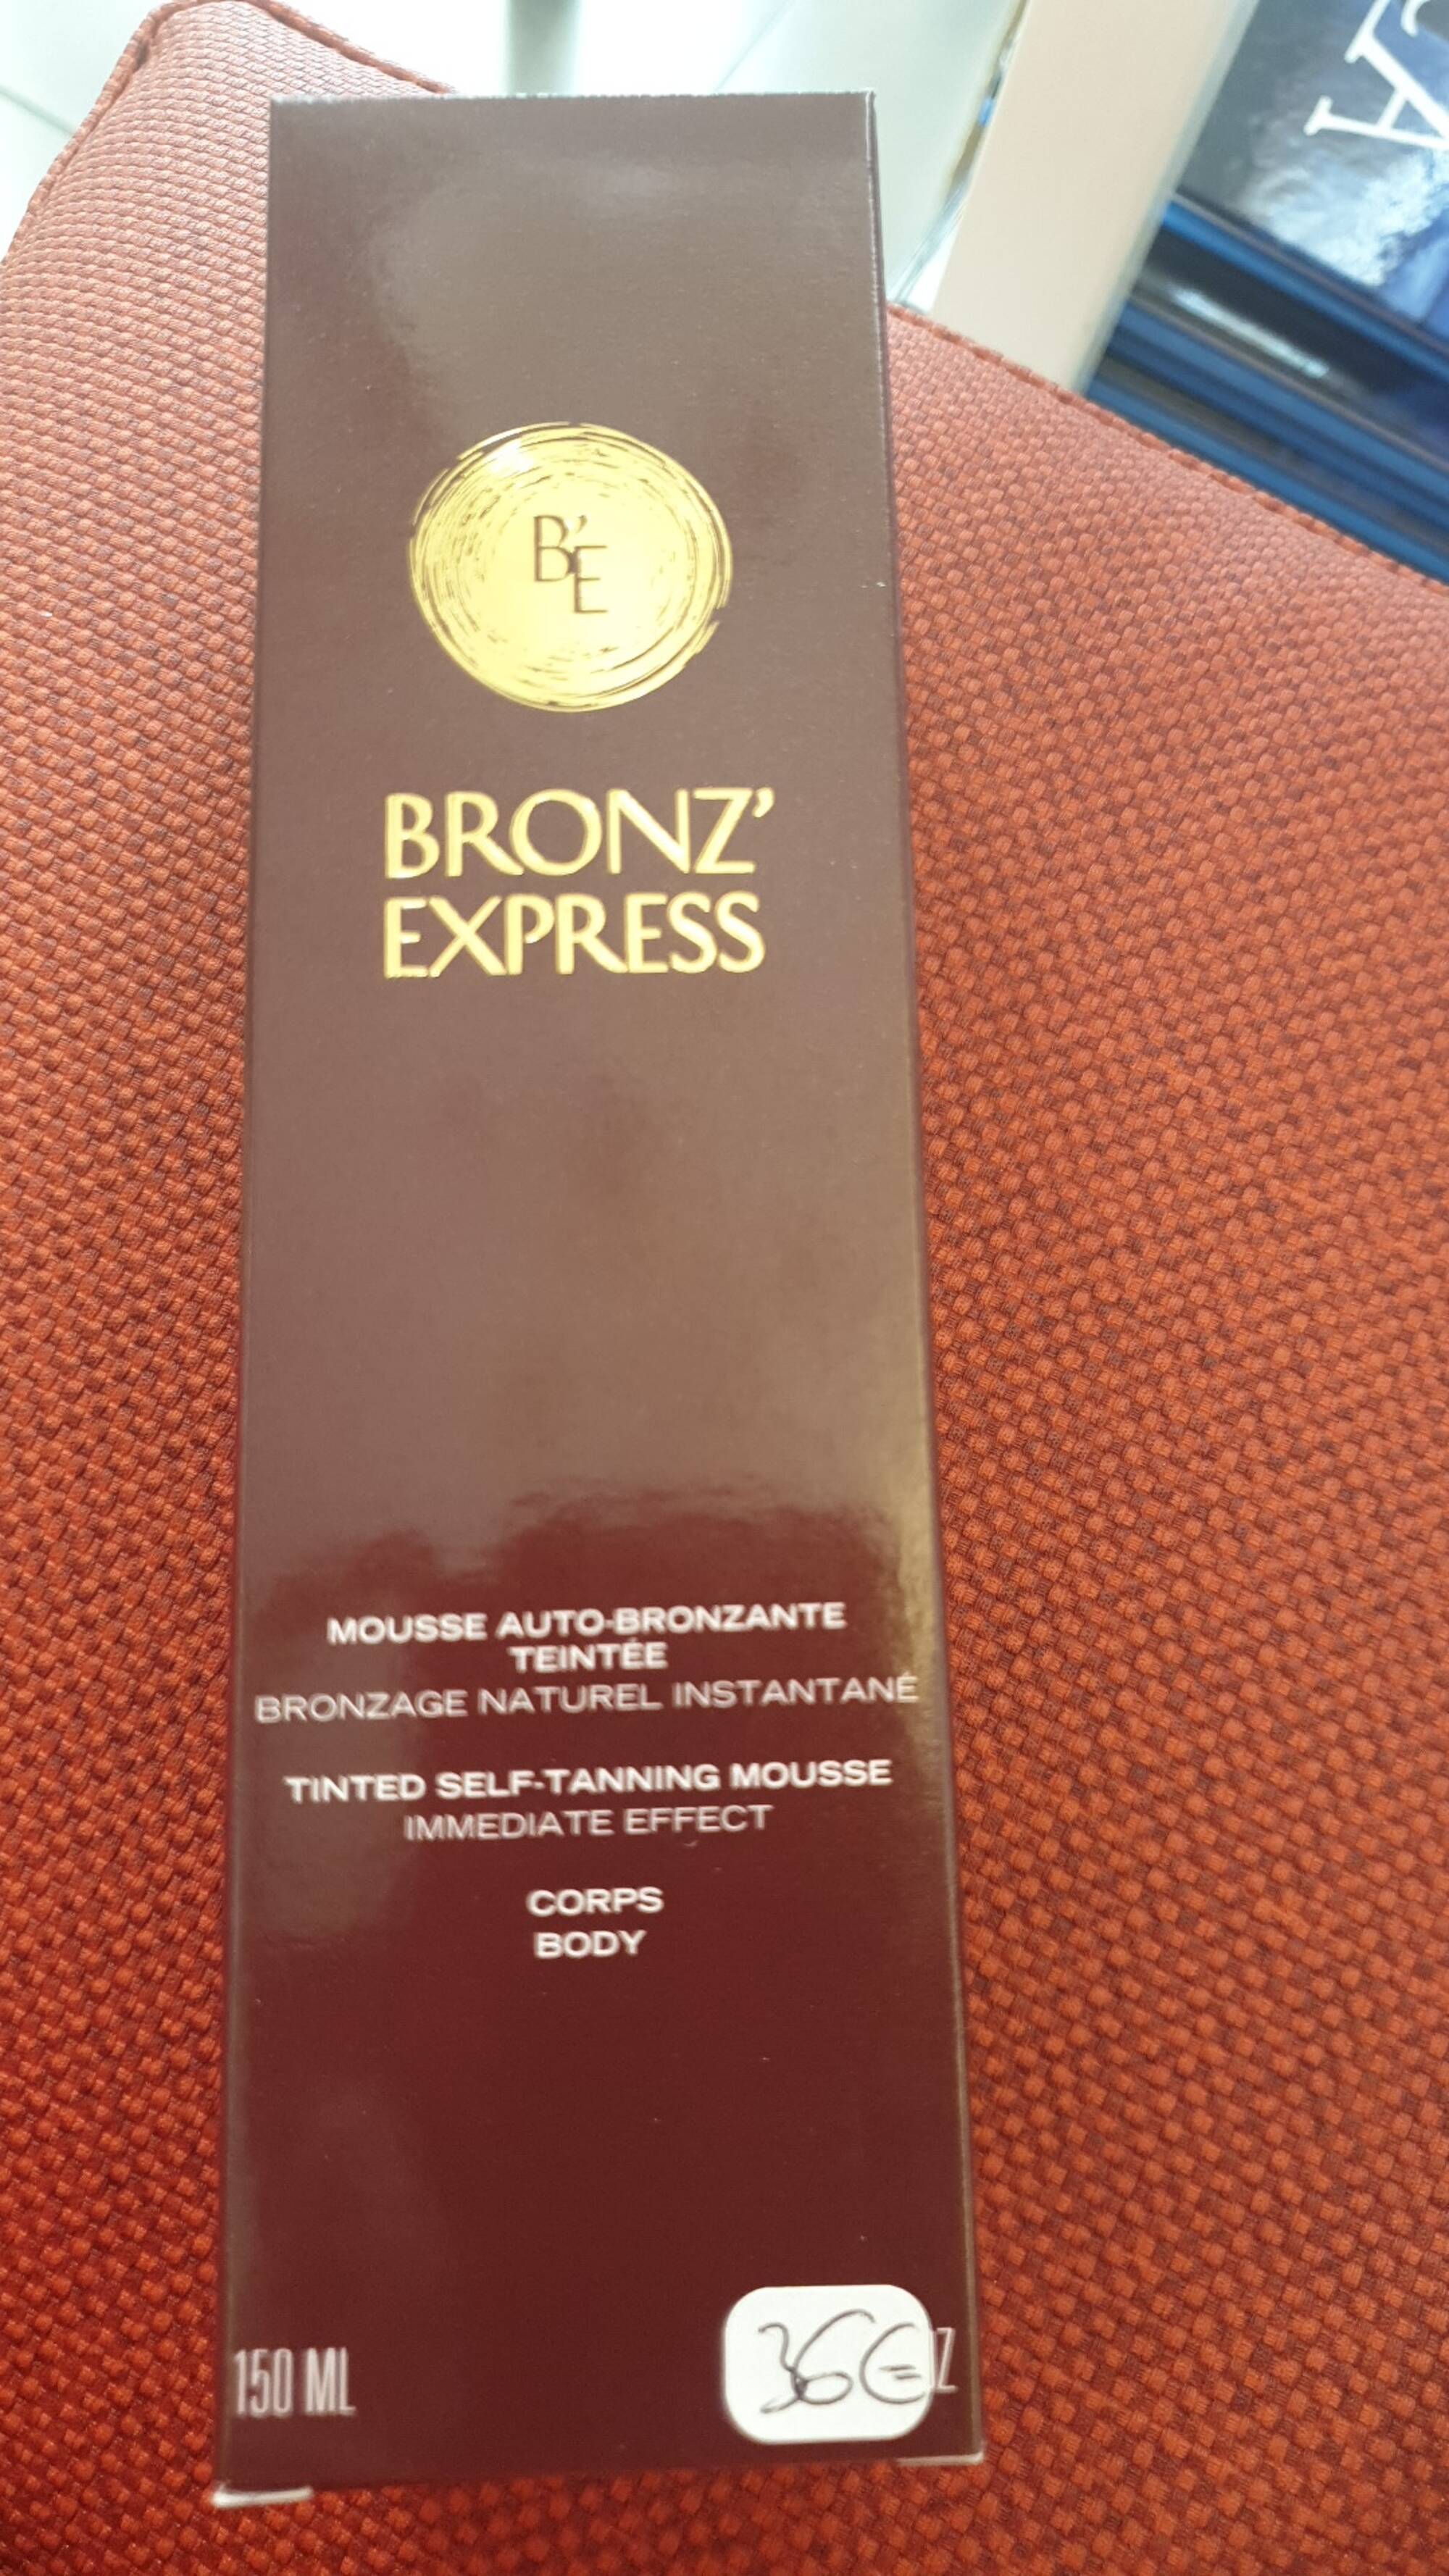 BRONZ'EXPRESS - Mousse auto-bronzante teintée